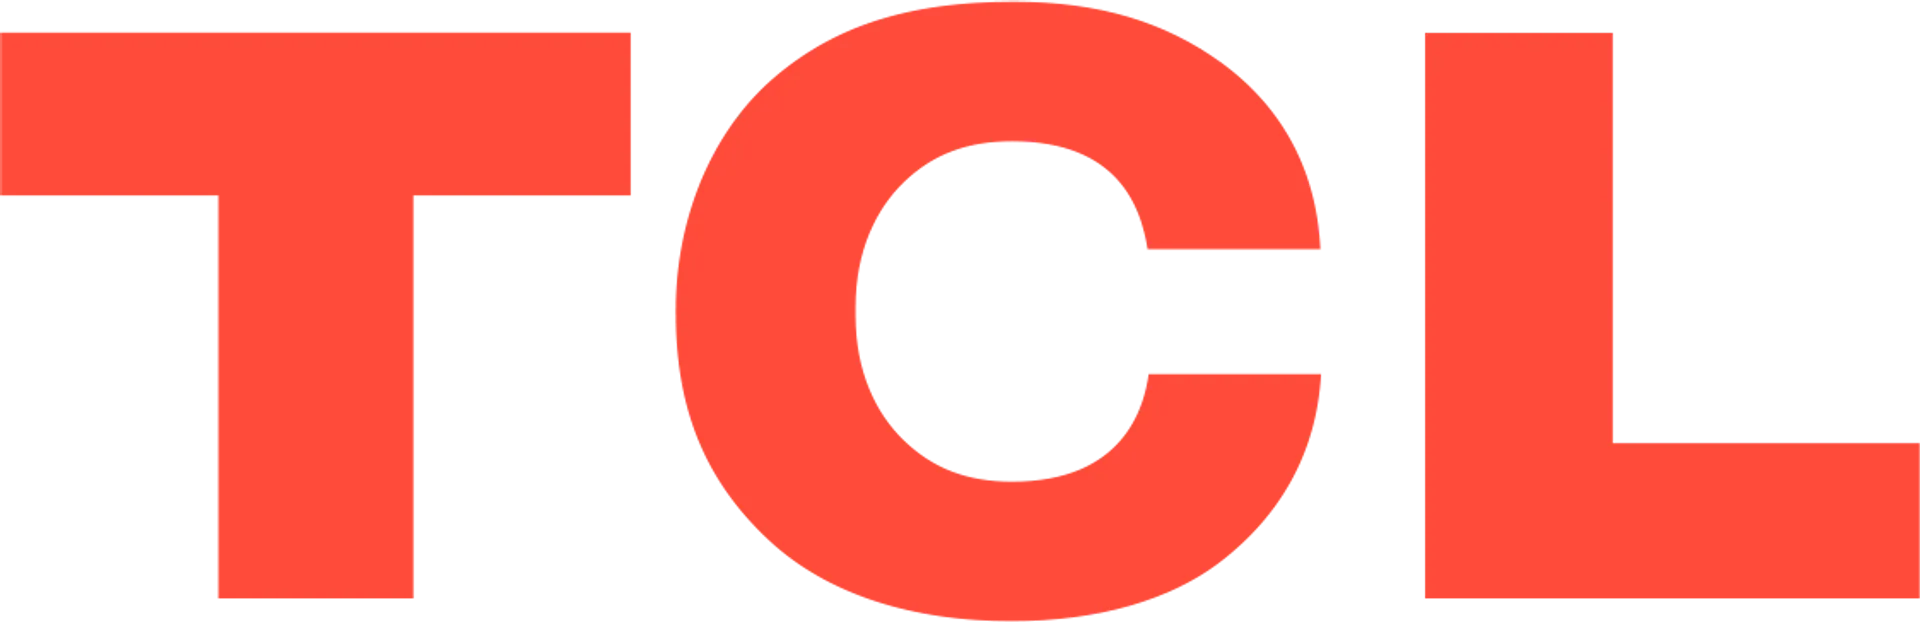 TCL INDIA logo. Current catalogue